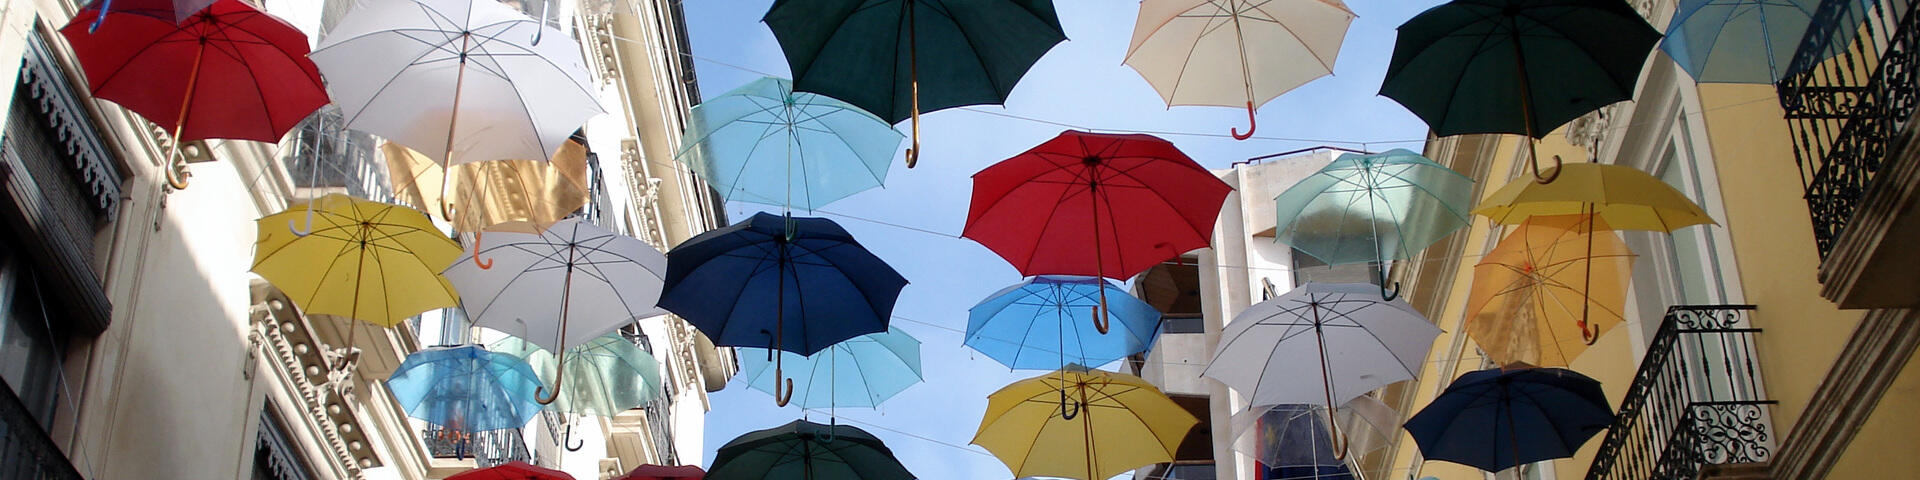 Parapluies dans la rue, Alicante